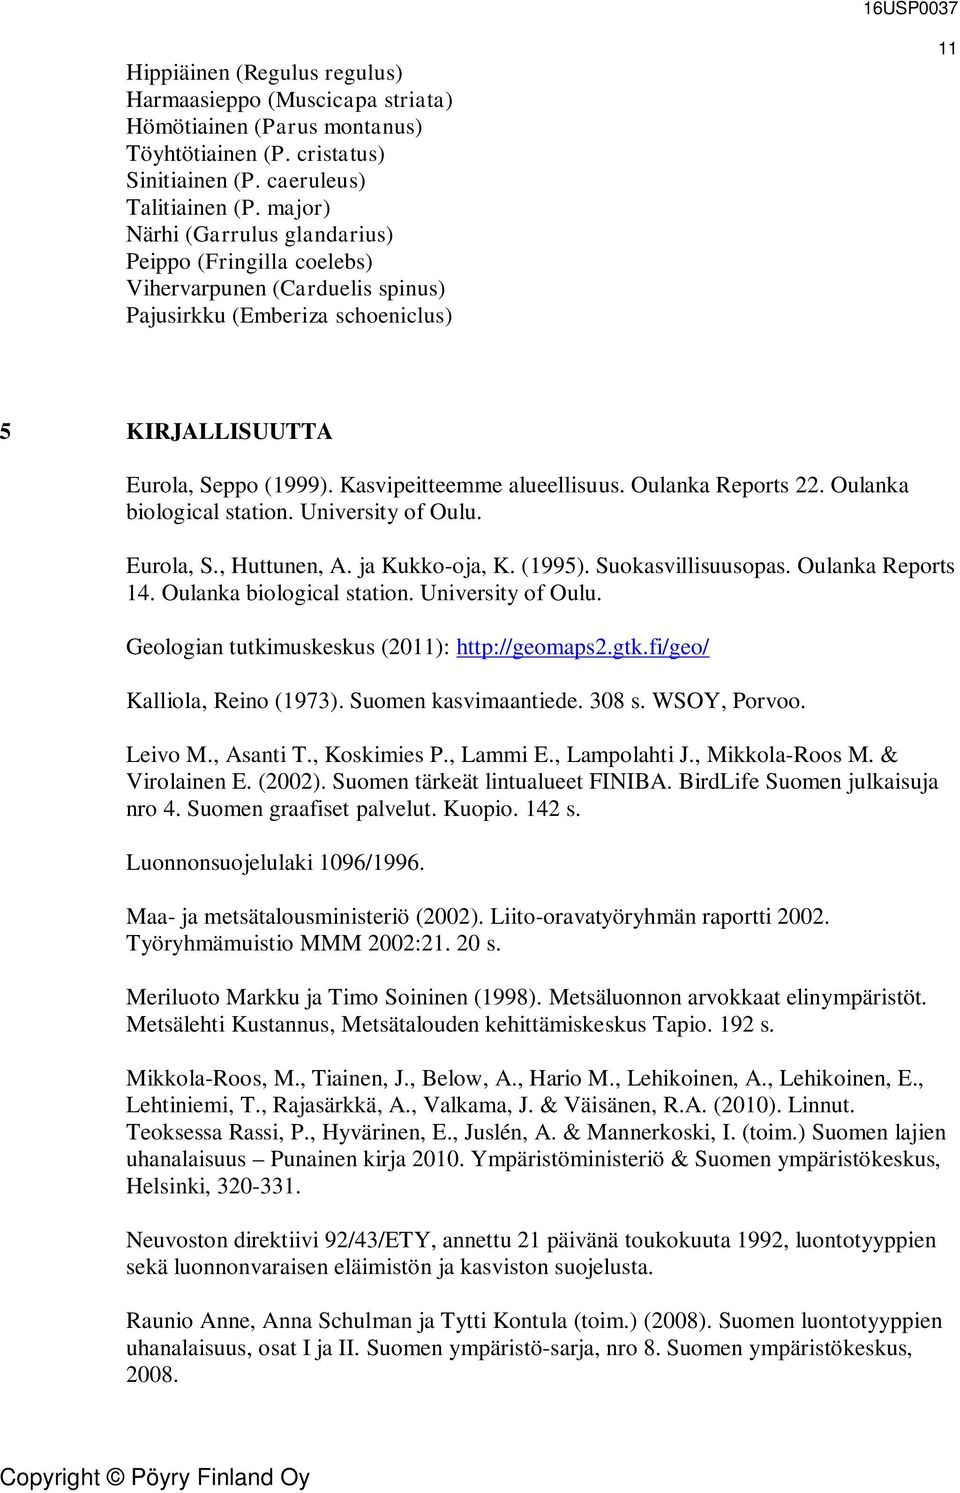 Oulanka Reports 22. Oulanka biological station. University of Oulu. Eurola, S., Huttunen, A. ja Kukko-oja, K. (1995). Suokasvillisuusopas. Oulanka Reports 14. Oulanka biological station. University of Oulu. Geologian tutkimuskeskus (2011): http://geomaps2.